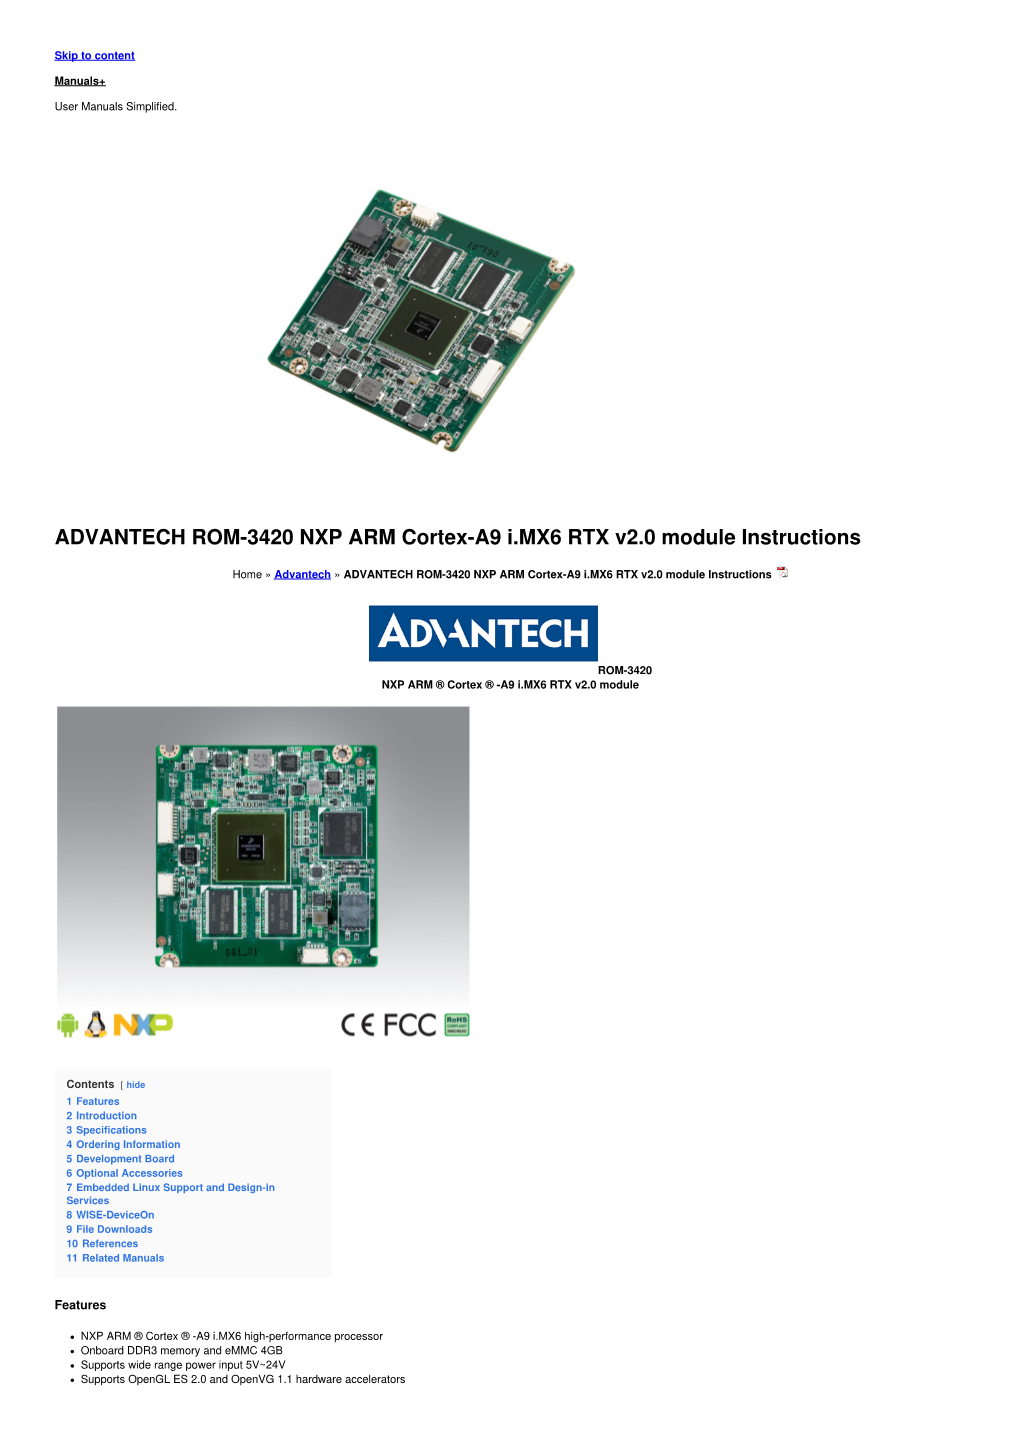 ADVANTECH ROM-3420 NXP ARM Cortex-A9 I.MX6 RTX V2.0 Module Instructions